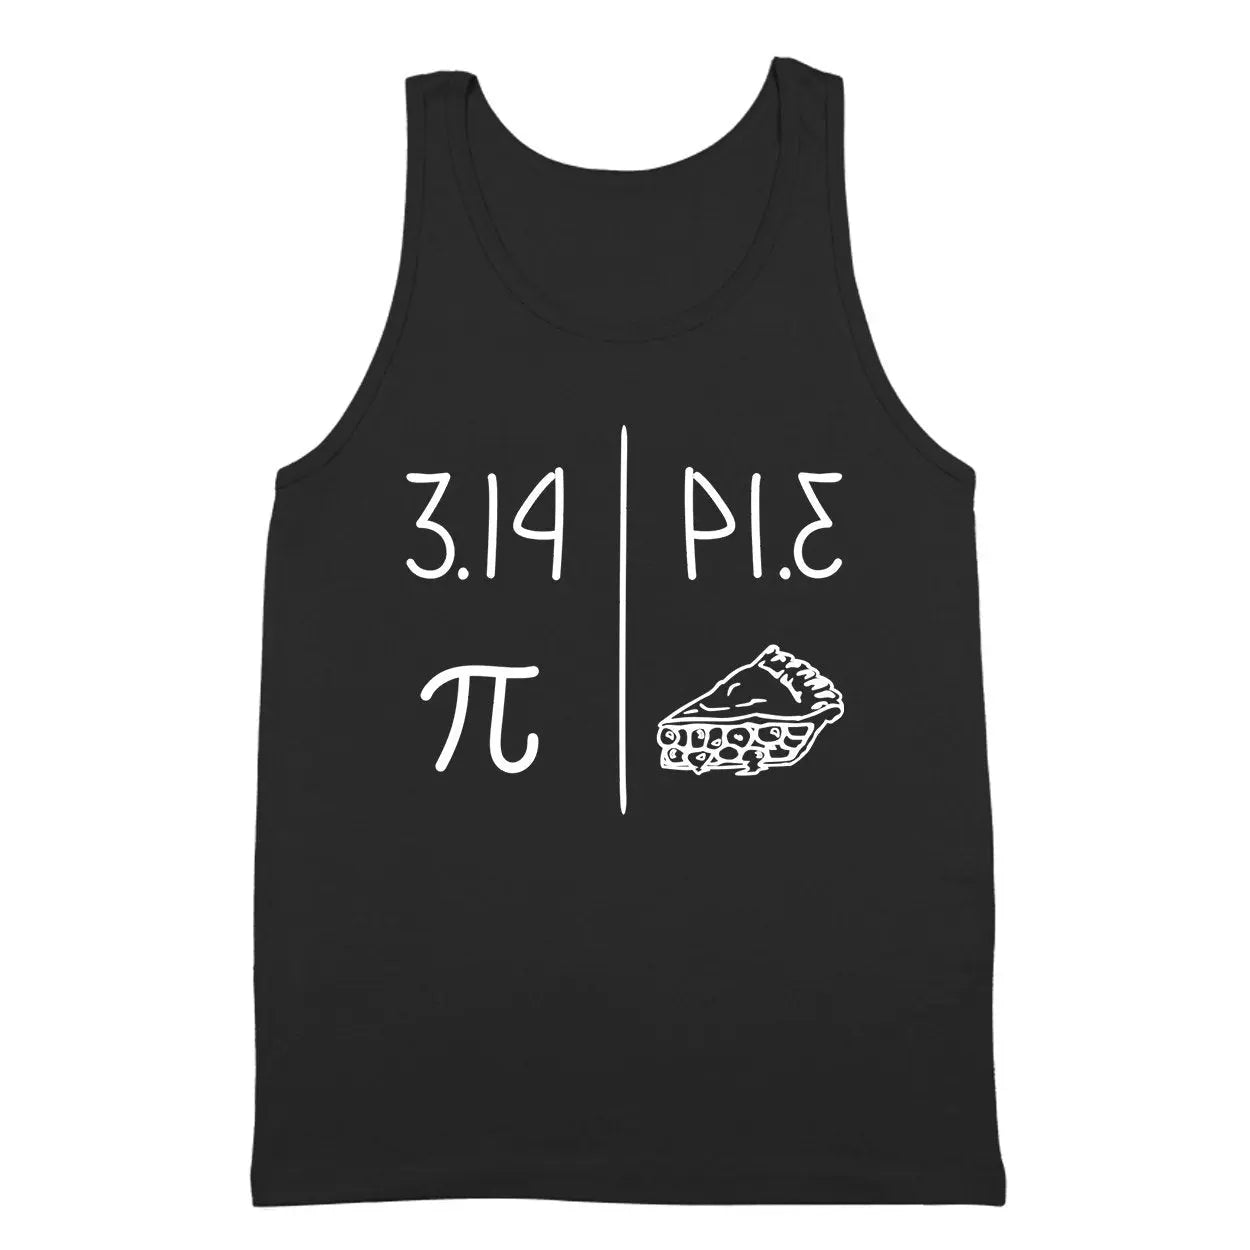 3.14 Pie Day 314 Tshirt - Donkey Tees